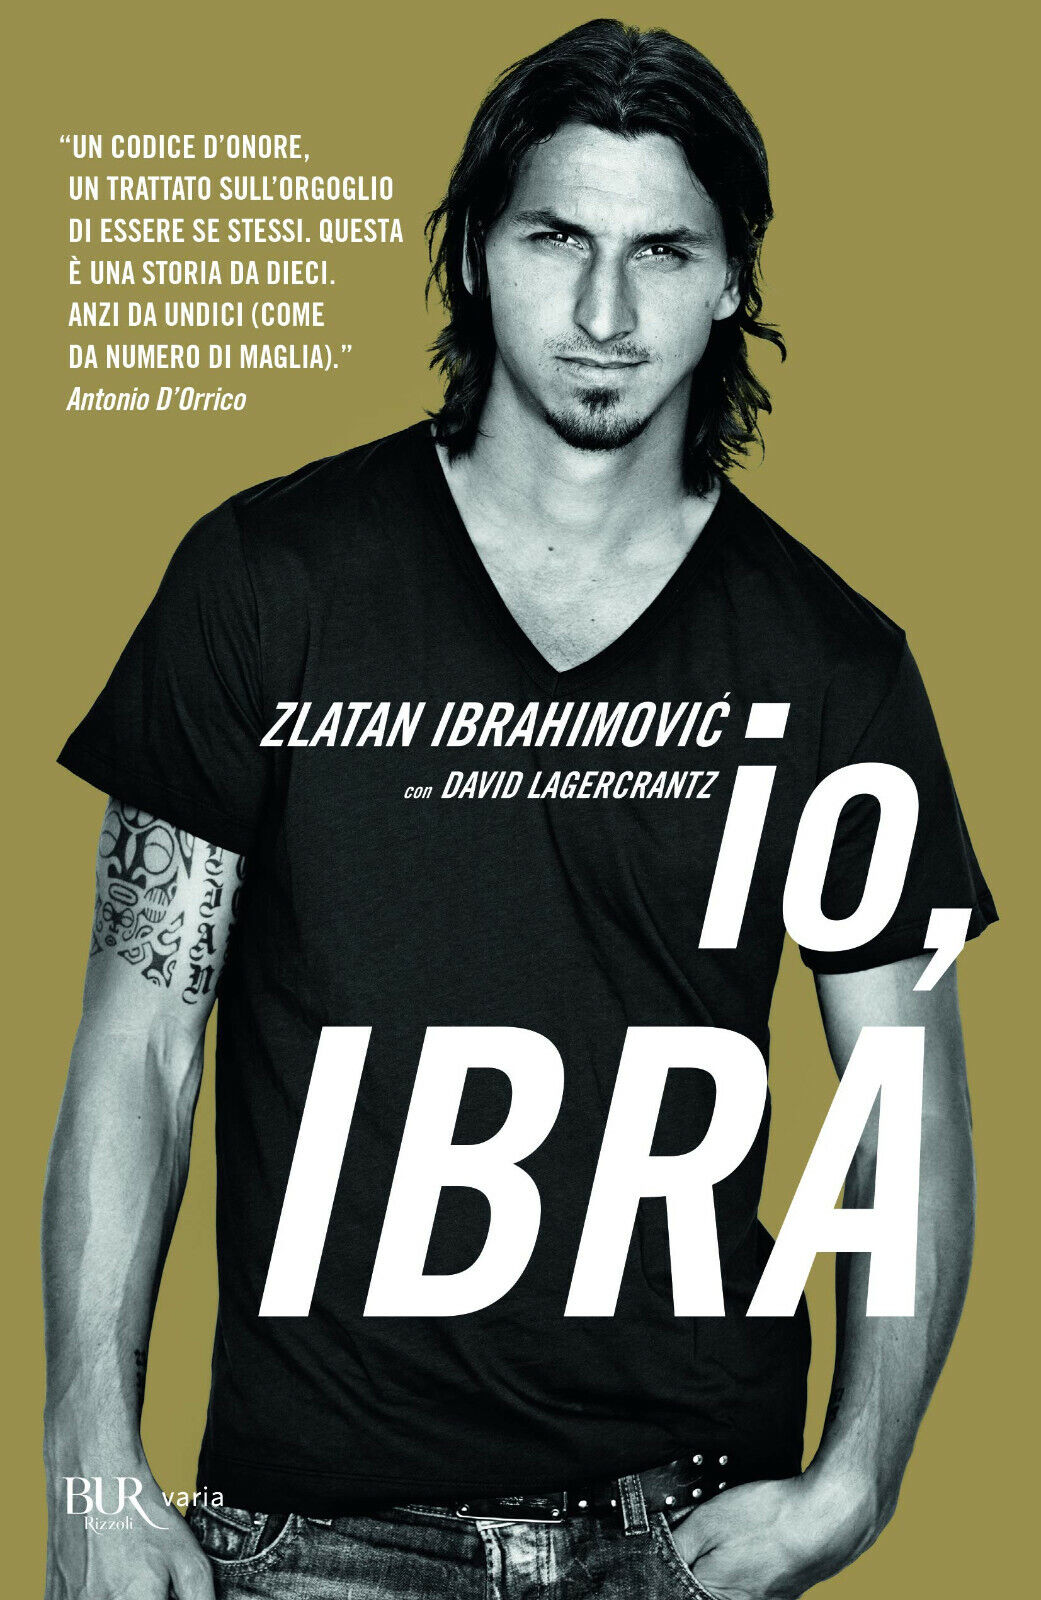 Io, Ibra - Zlatan Ibrahimovic, David Lagercrantz - Rizzoli, 2013